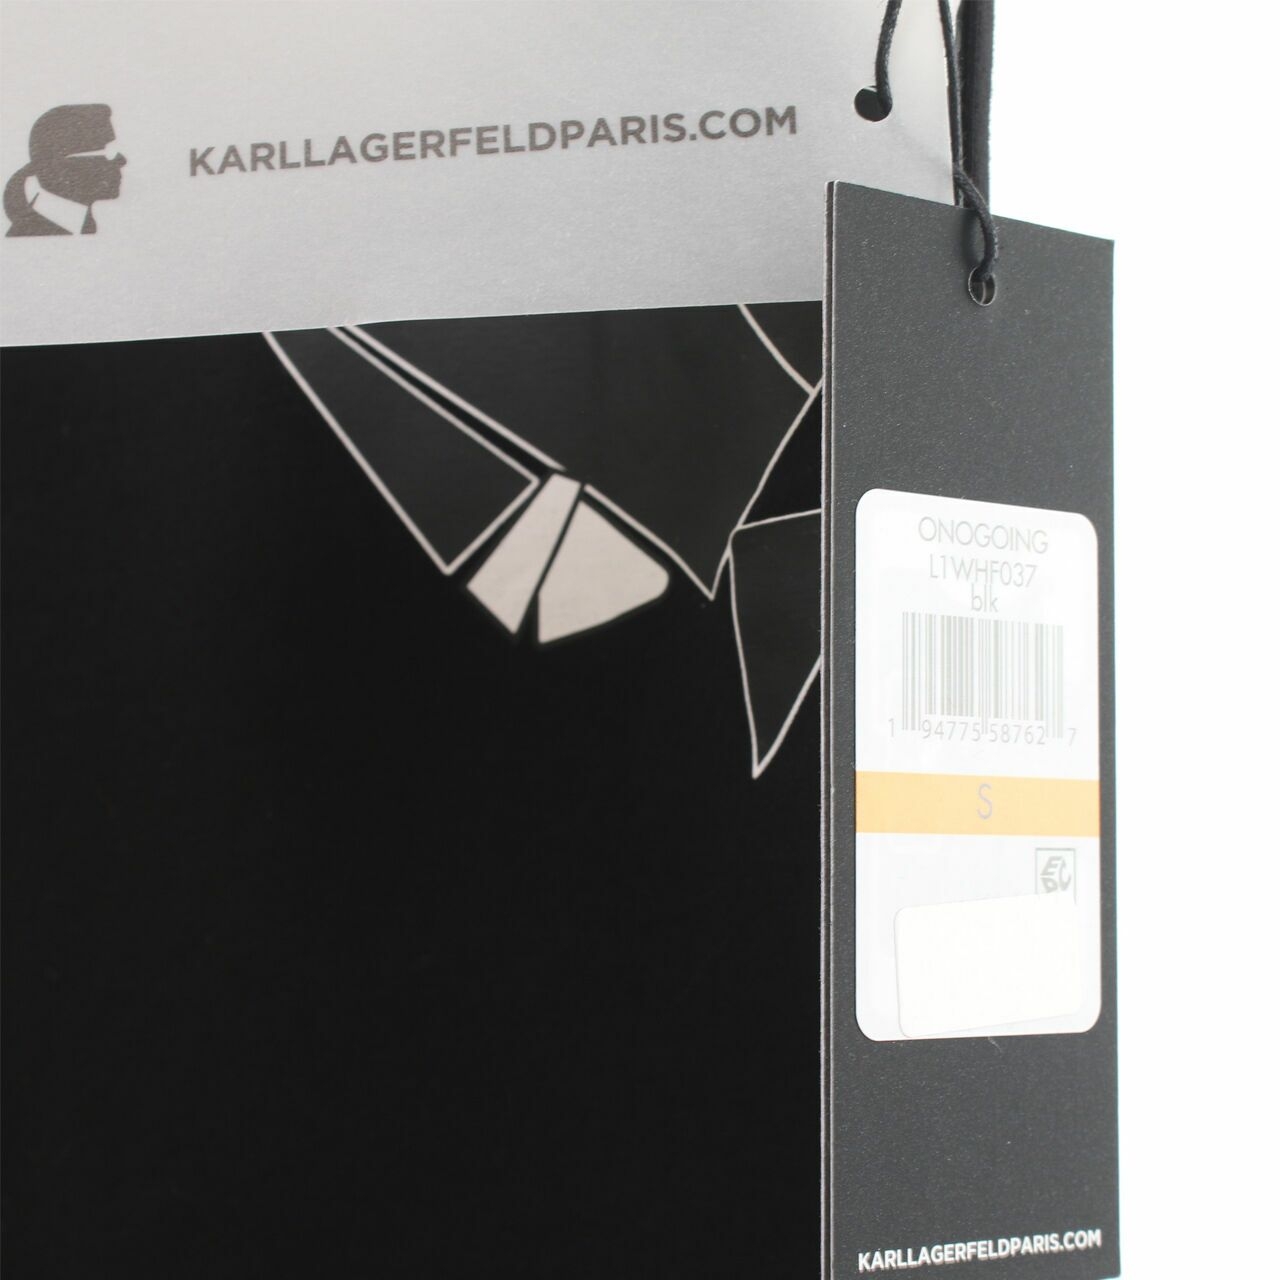 Karl Lagerfeld Paris Cat Doll Partner Personalized  Graphic Black Tshirt